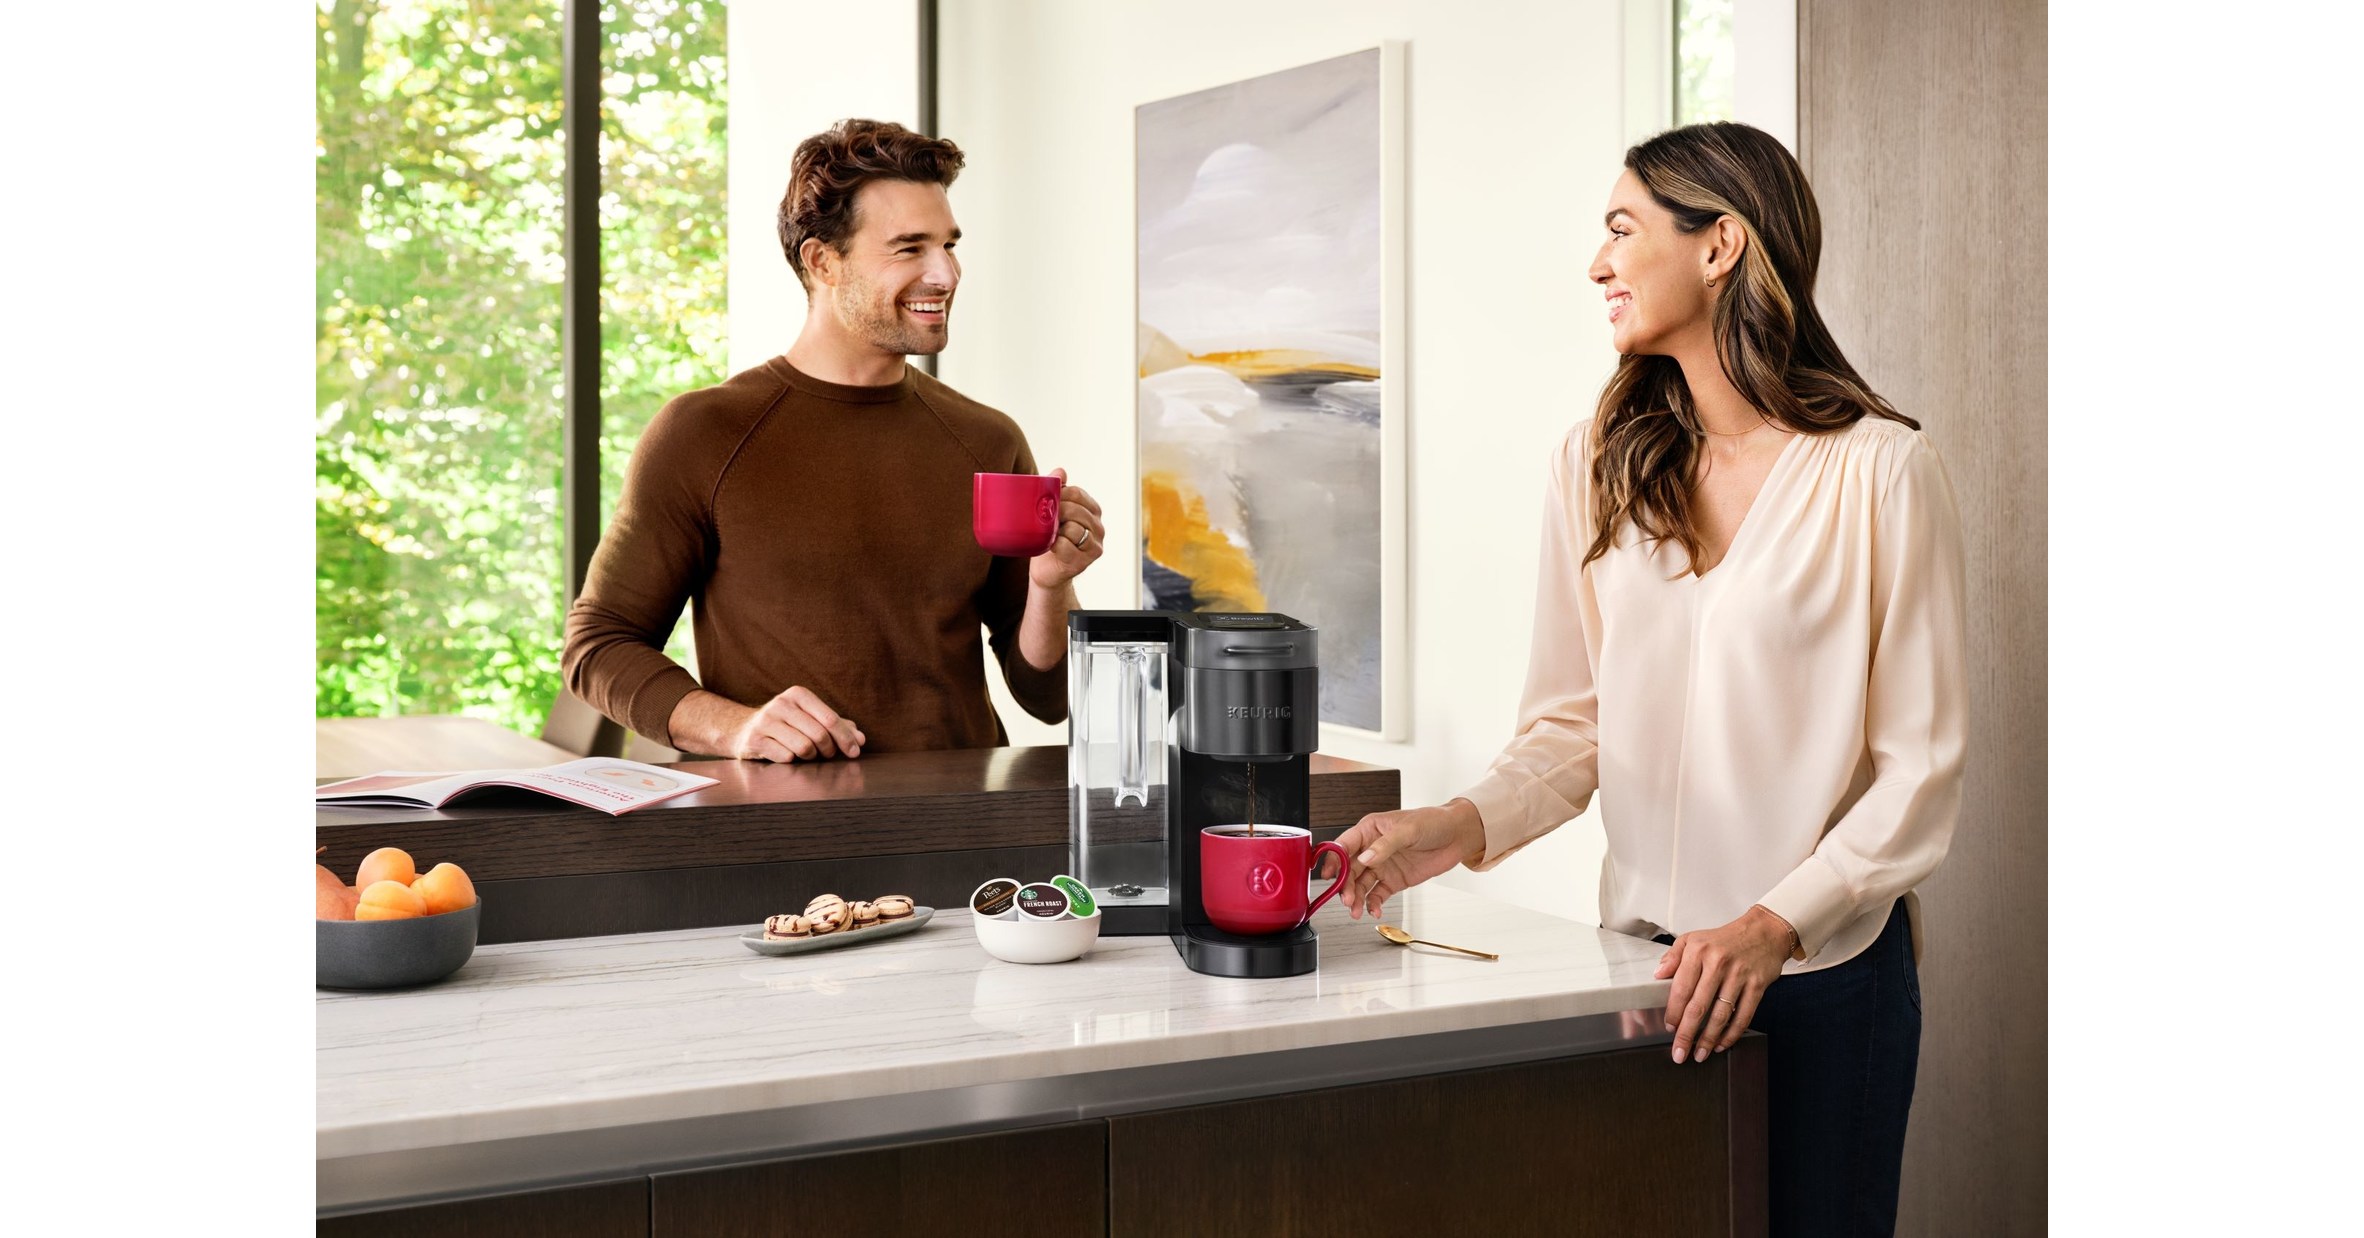 Keurig New Product Launch: Keurig K-Supreme Plus Smart Coffee Maker Review